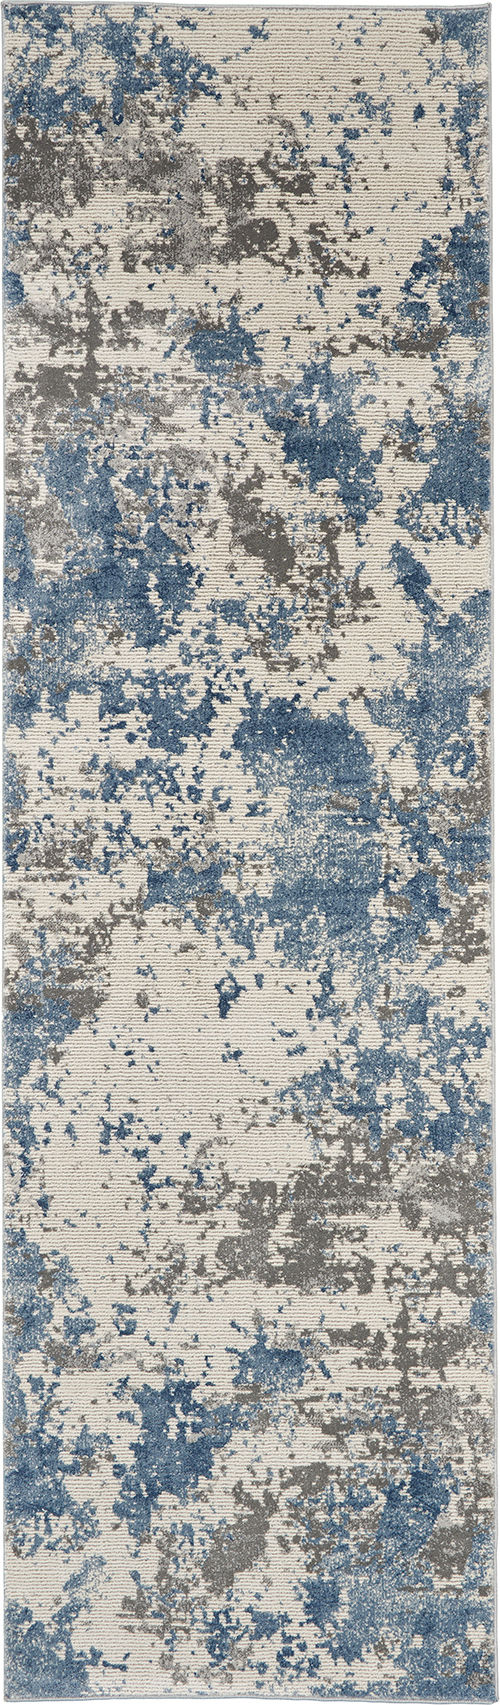 Nourison Rugs - Rustic Textures Runner RUS08 Rug in Grey / Blue - 2.3m x 0.66m